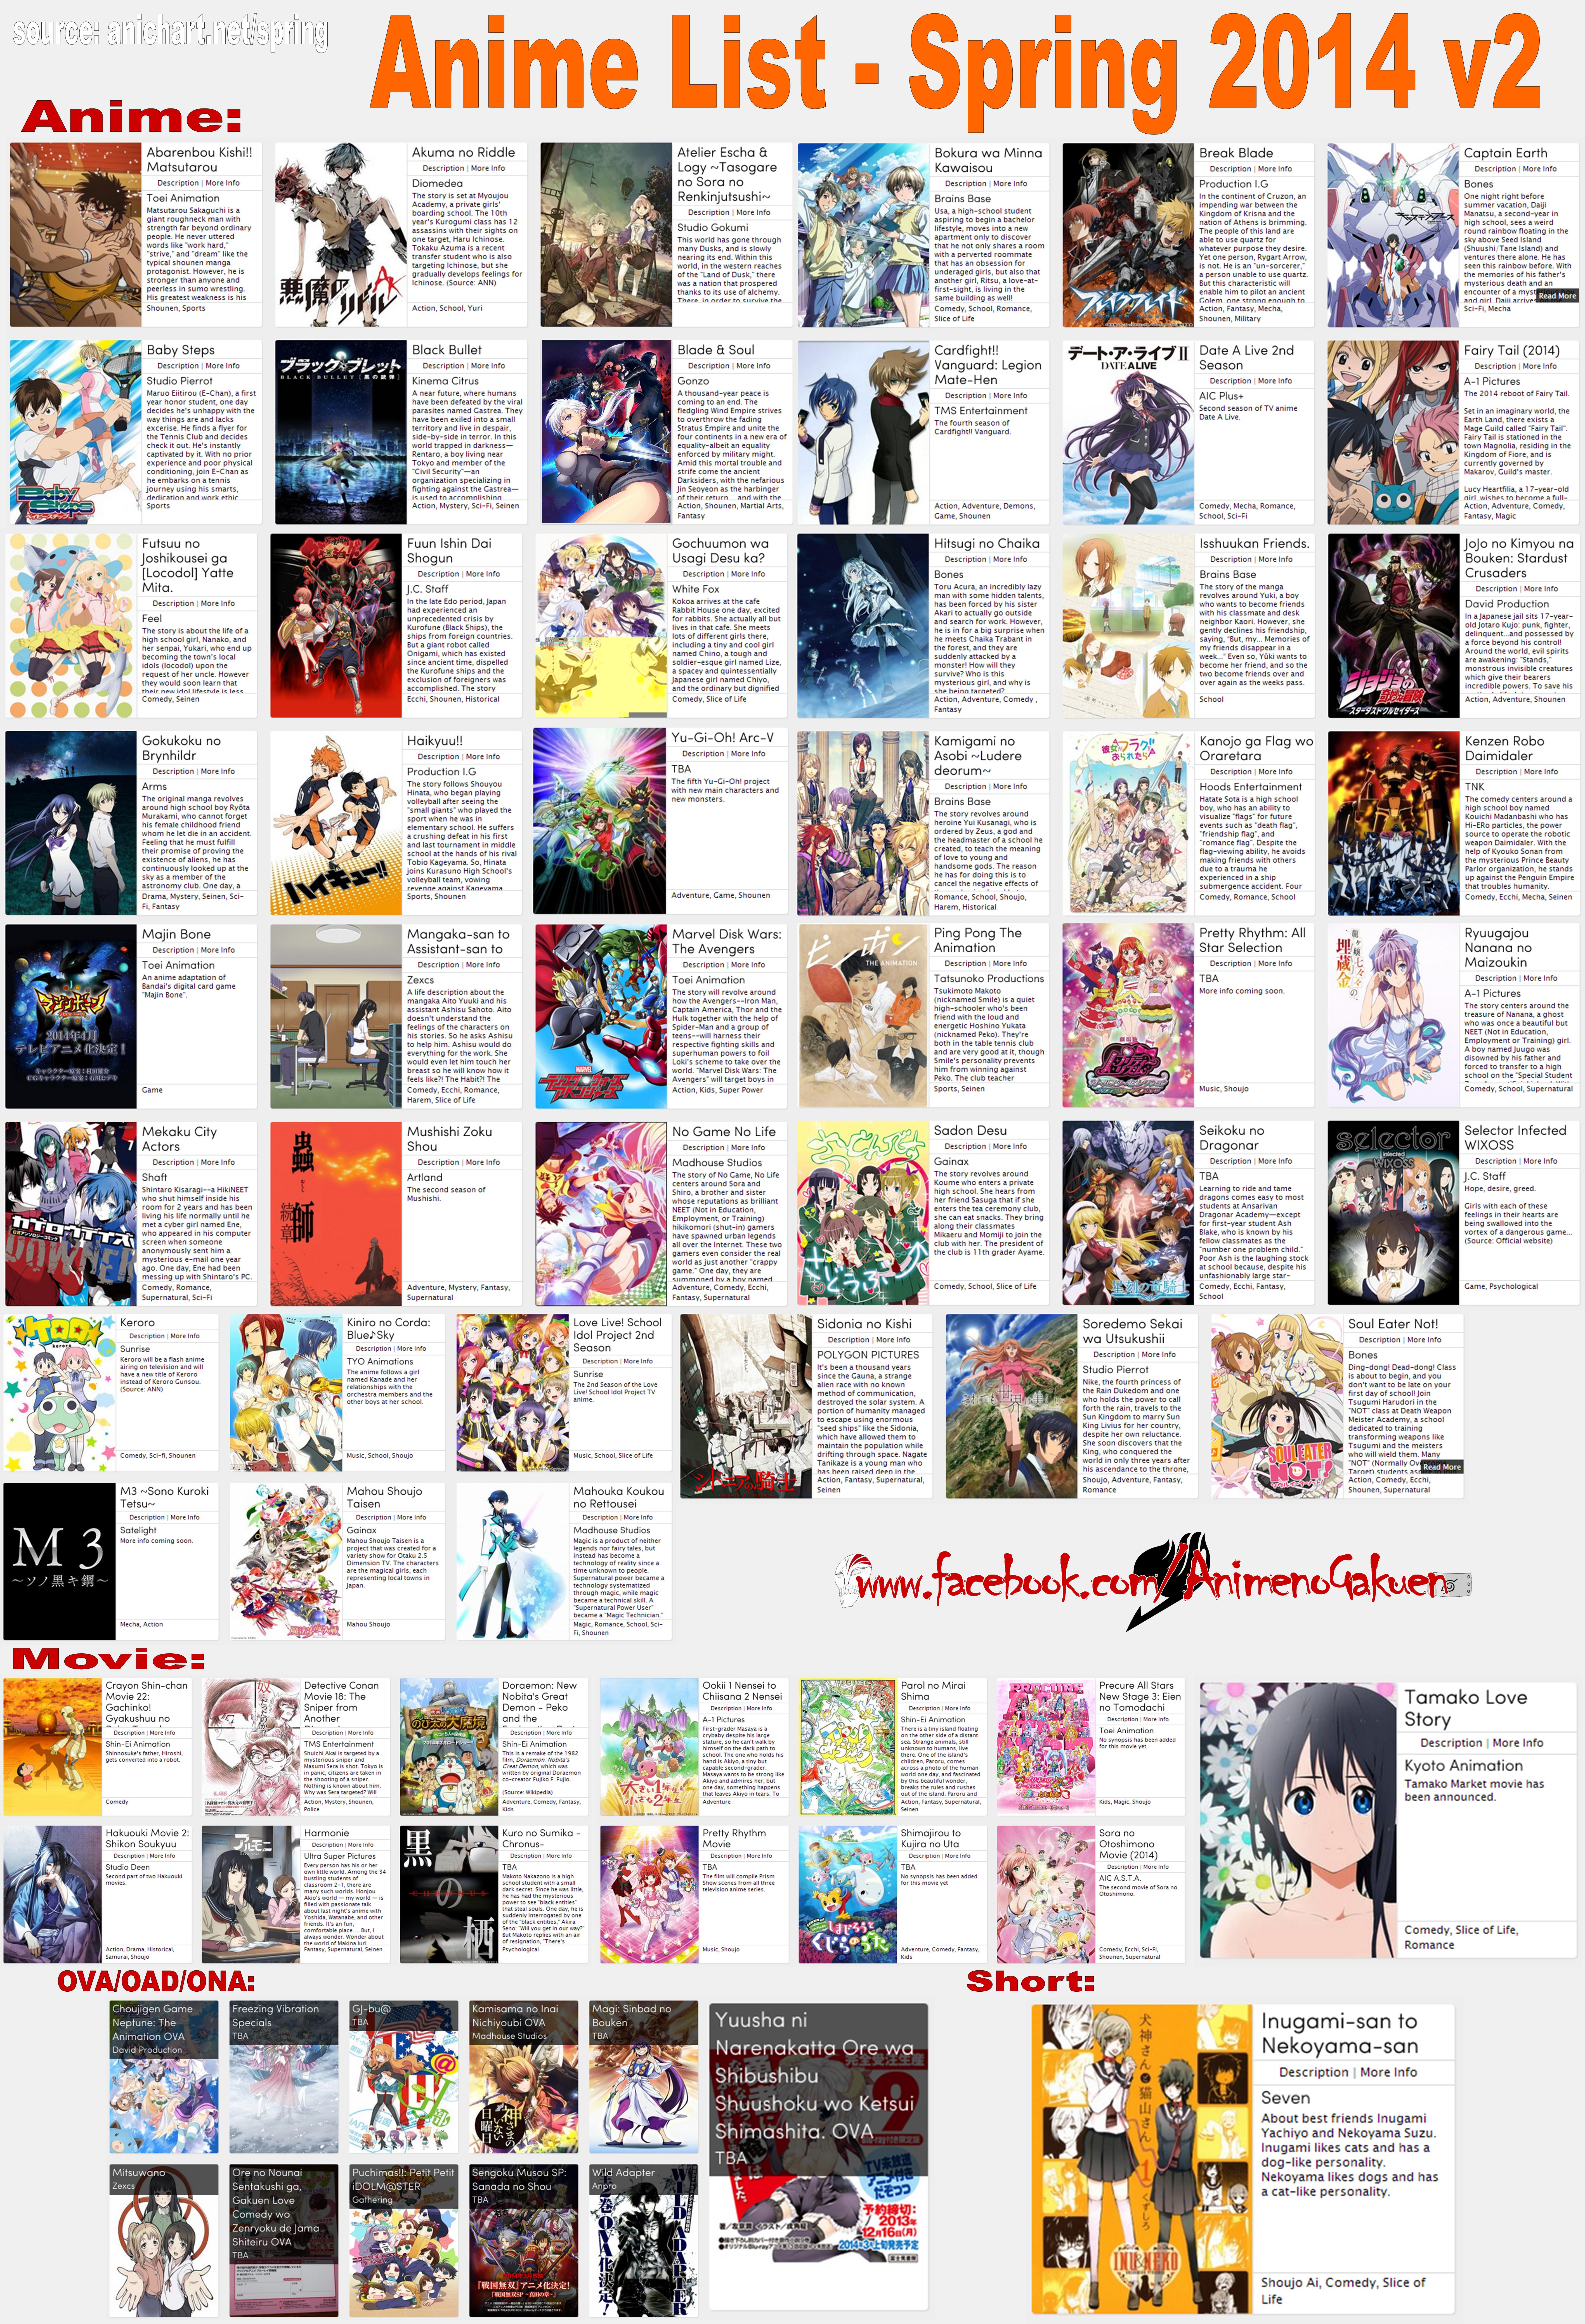 Animes de Primavera 2014Spring 2014 Anime List by brunomelanda on DeviantArt